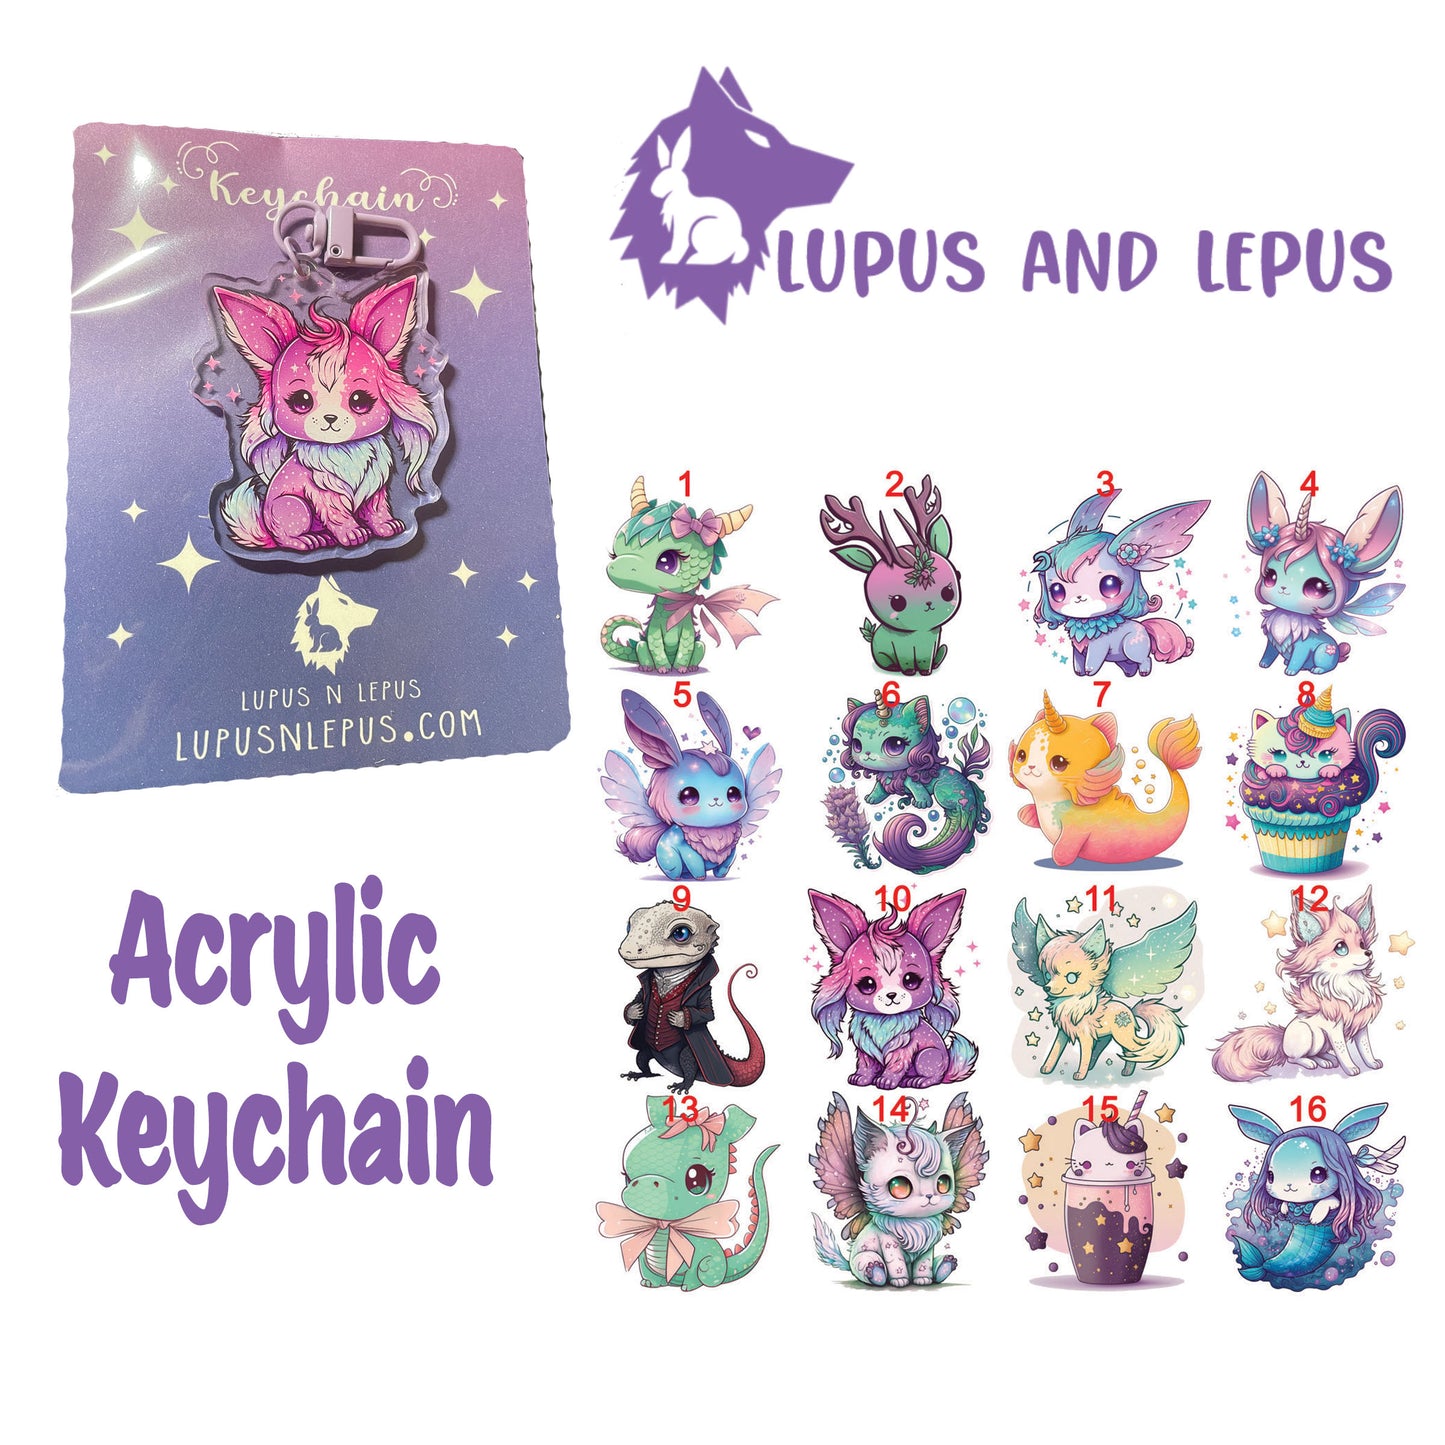 Acrylic Keychains 4 - My Art in the form of keychains, dragons, colorful, bunnies, faries, fairy, faery, magic, mythical, bear, giraffe, wearwolf, lizard, dinosaur,